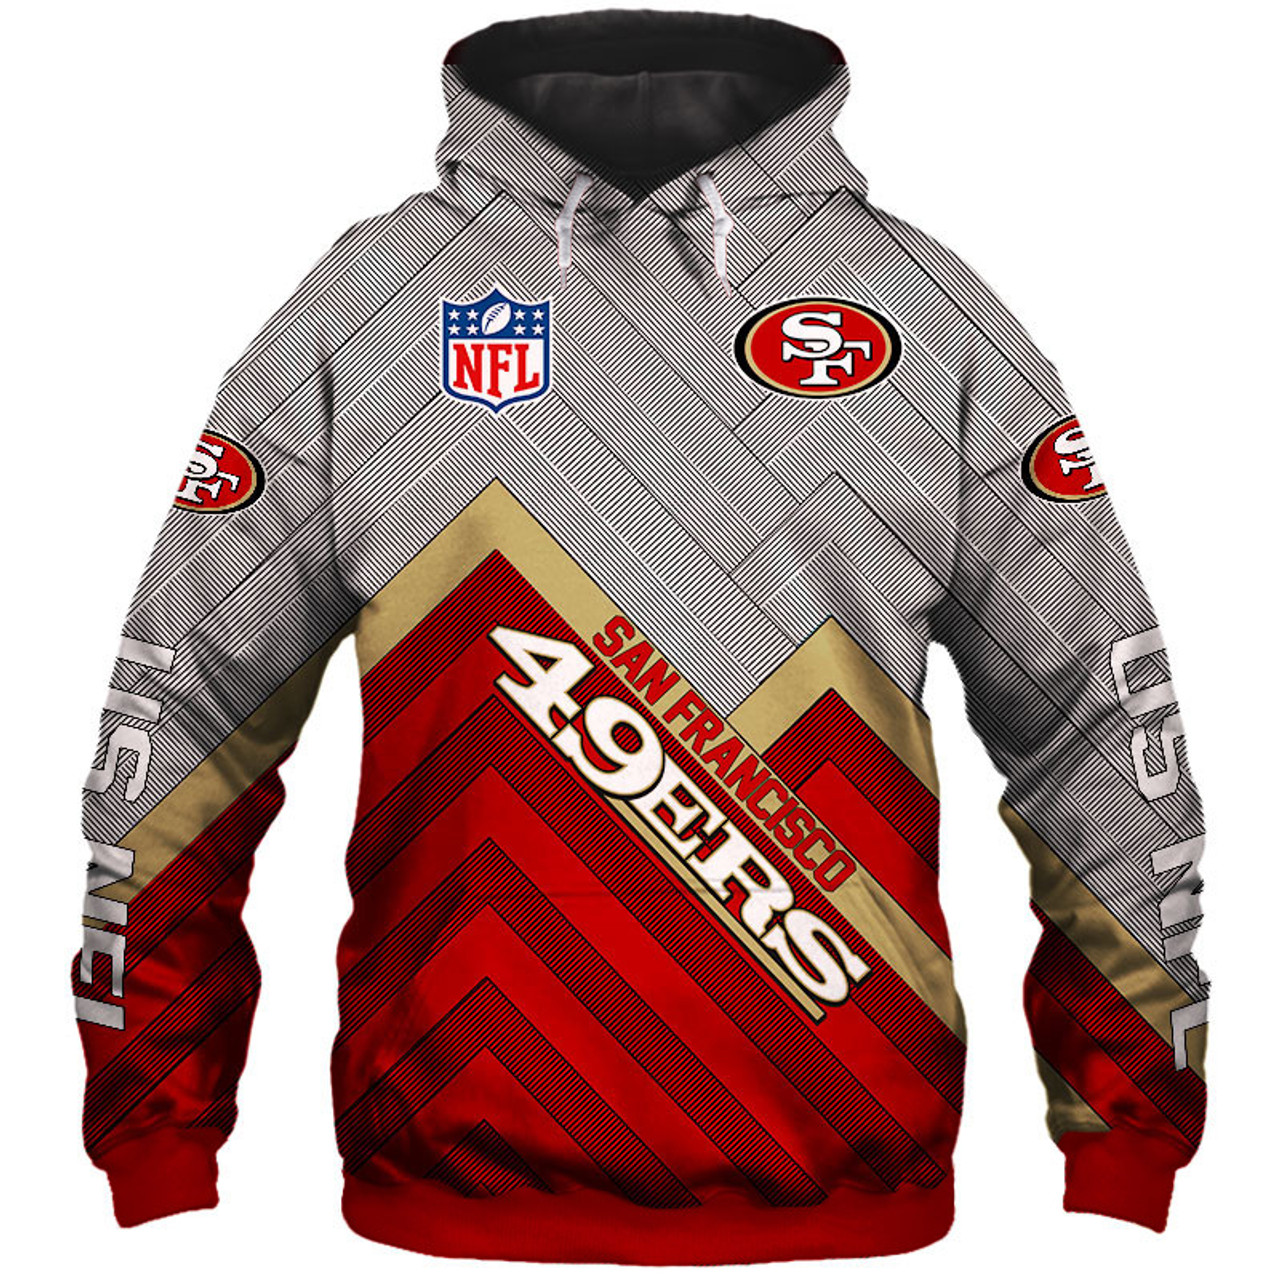 nfl 49ers sweatshirt